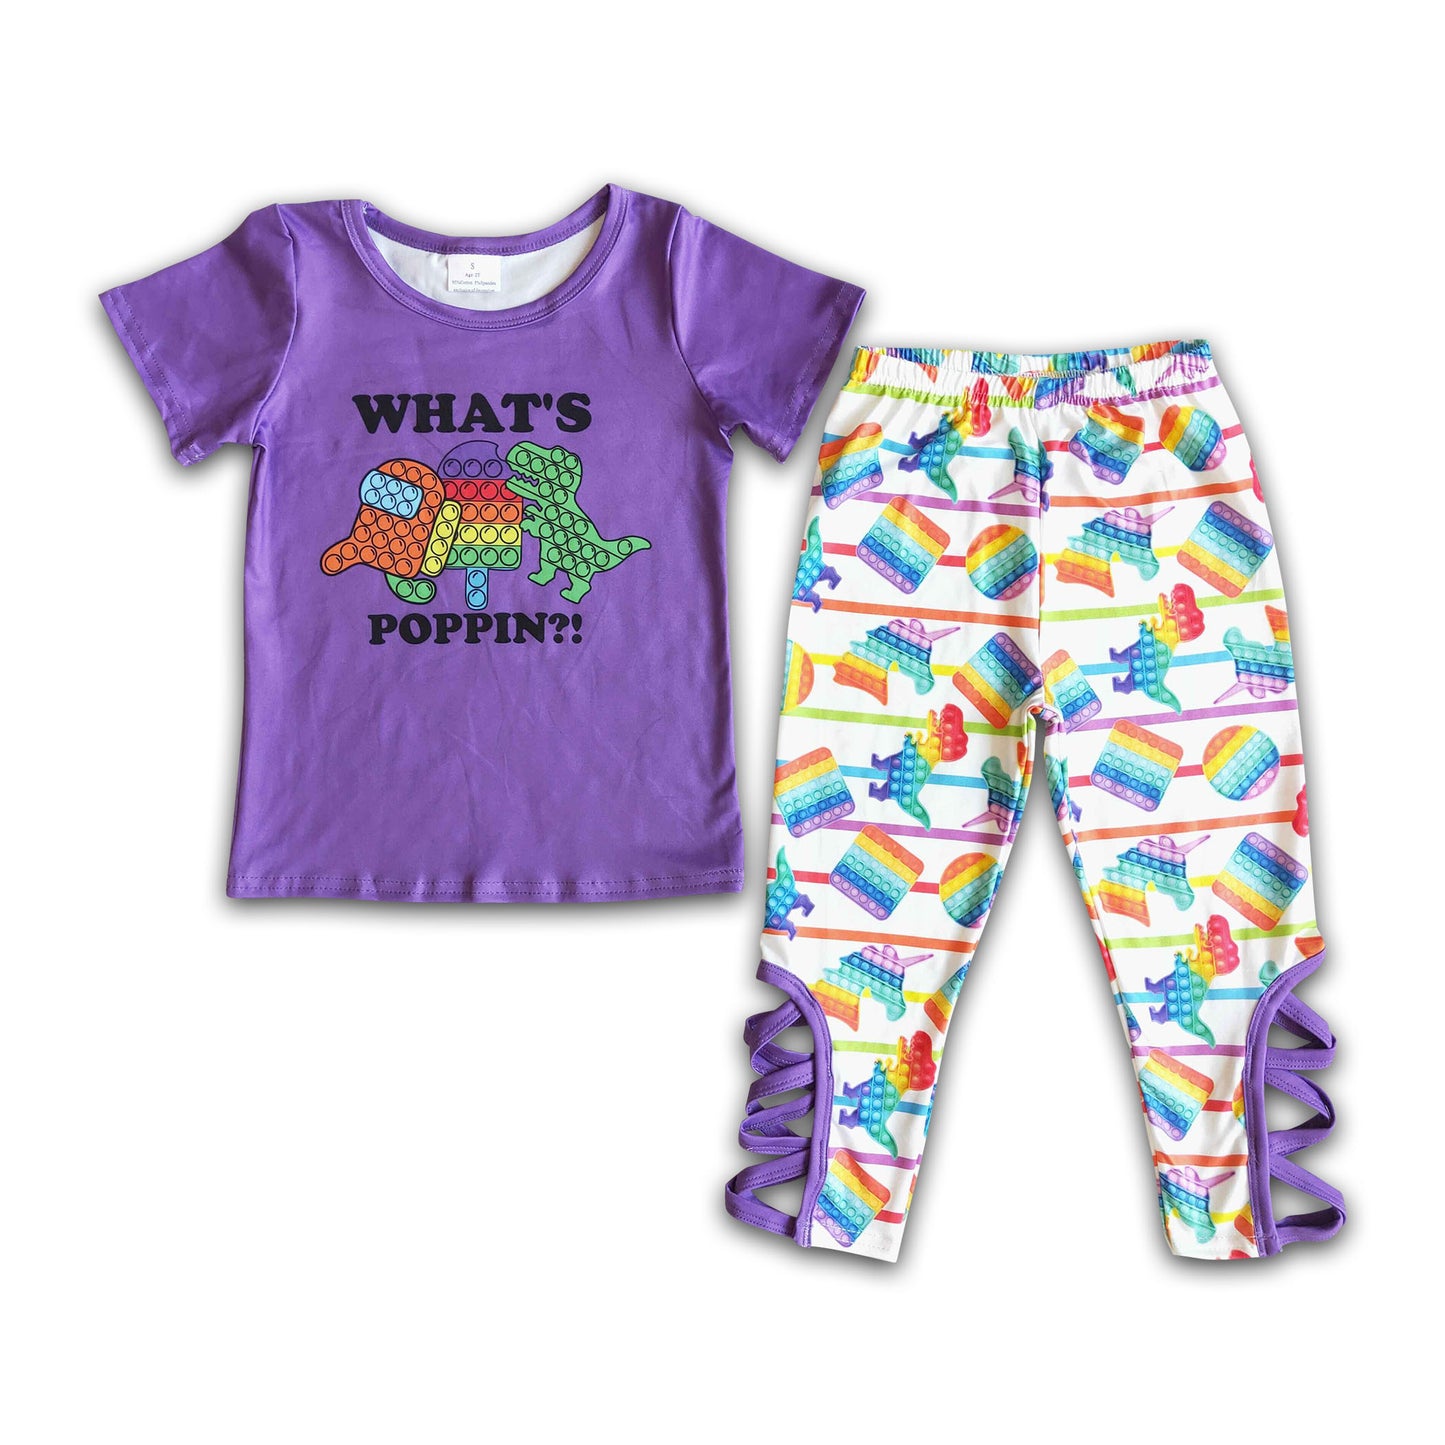 What's popin purple shirt dinosaur unicorn criss cross leggings girls outfits